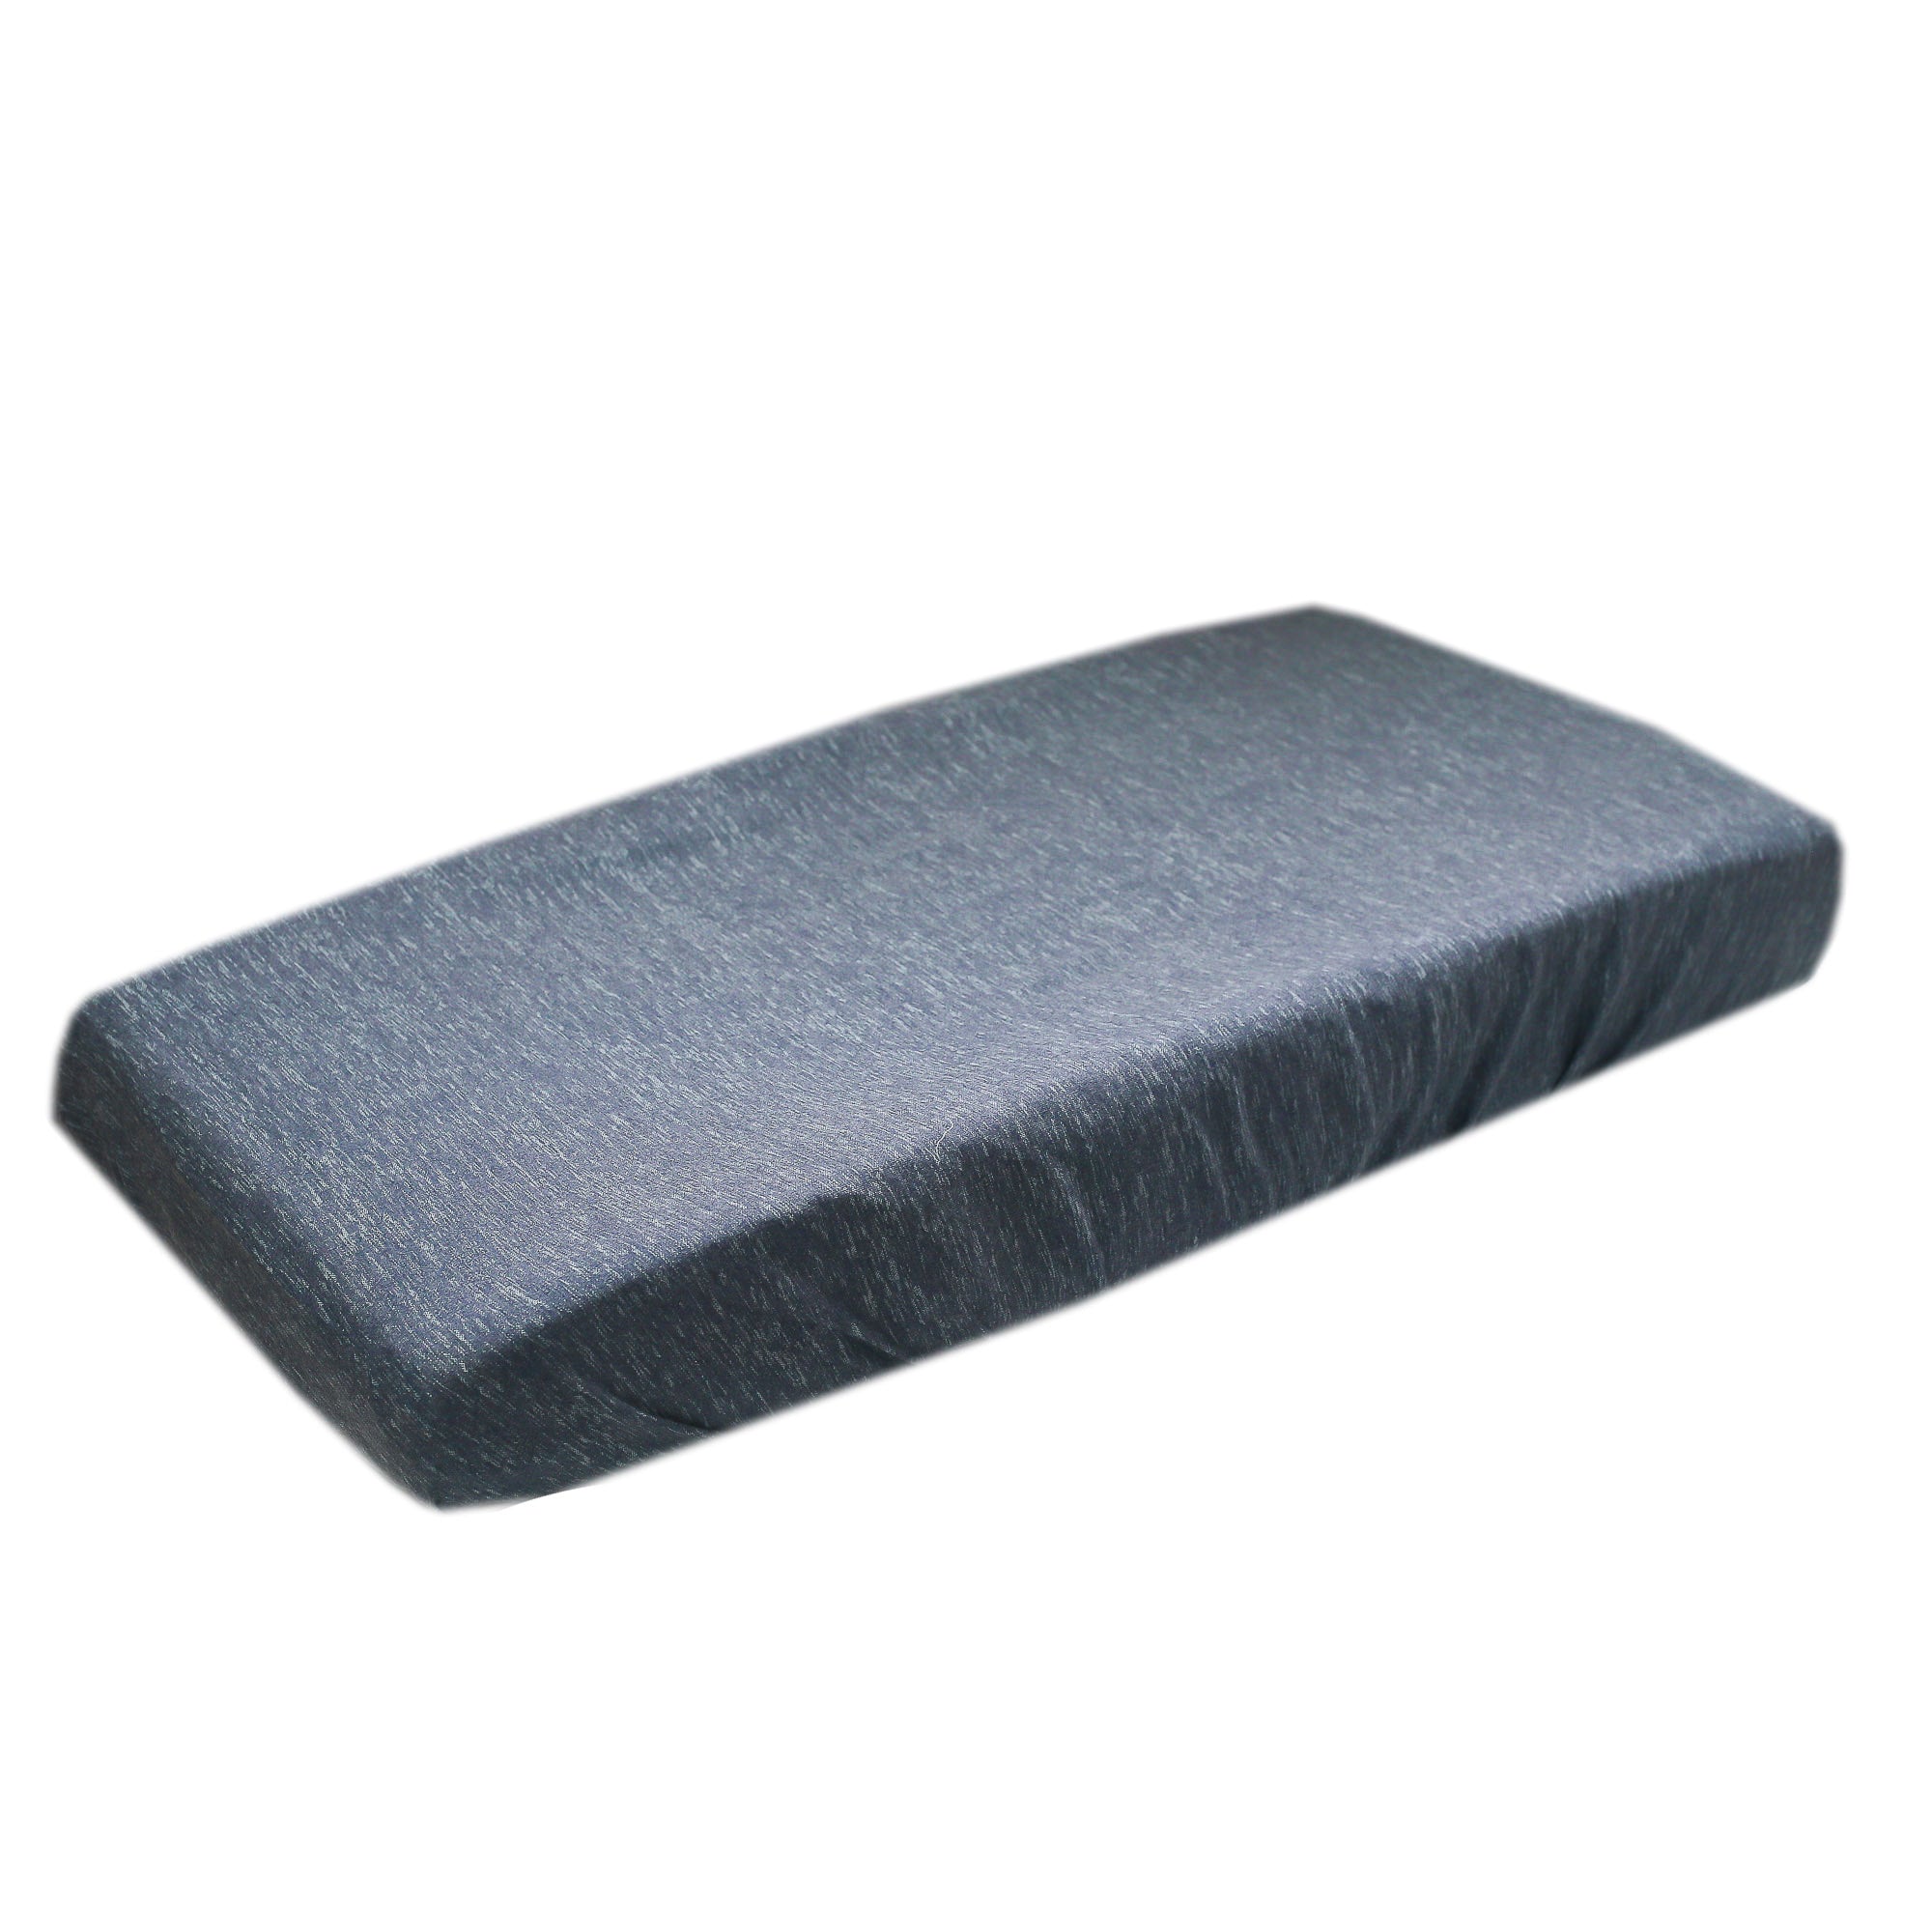 Premium Knit Diaper Changing Pad Cover - Denim